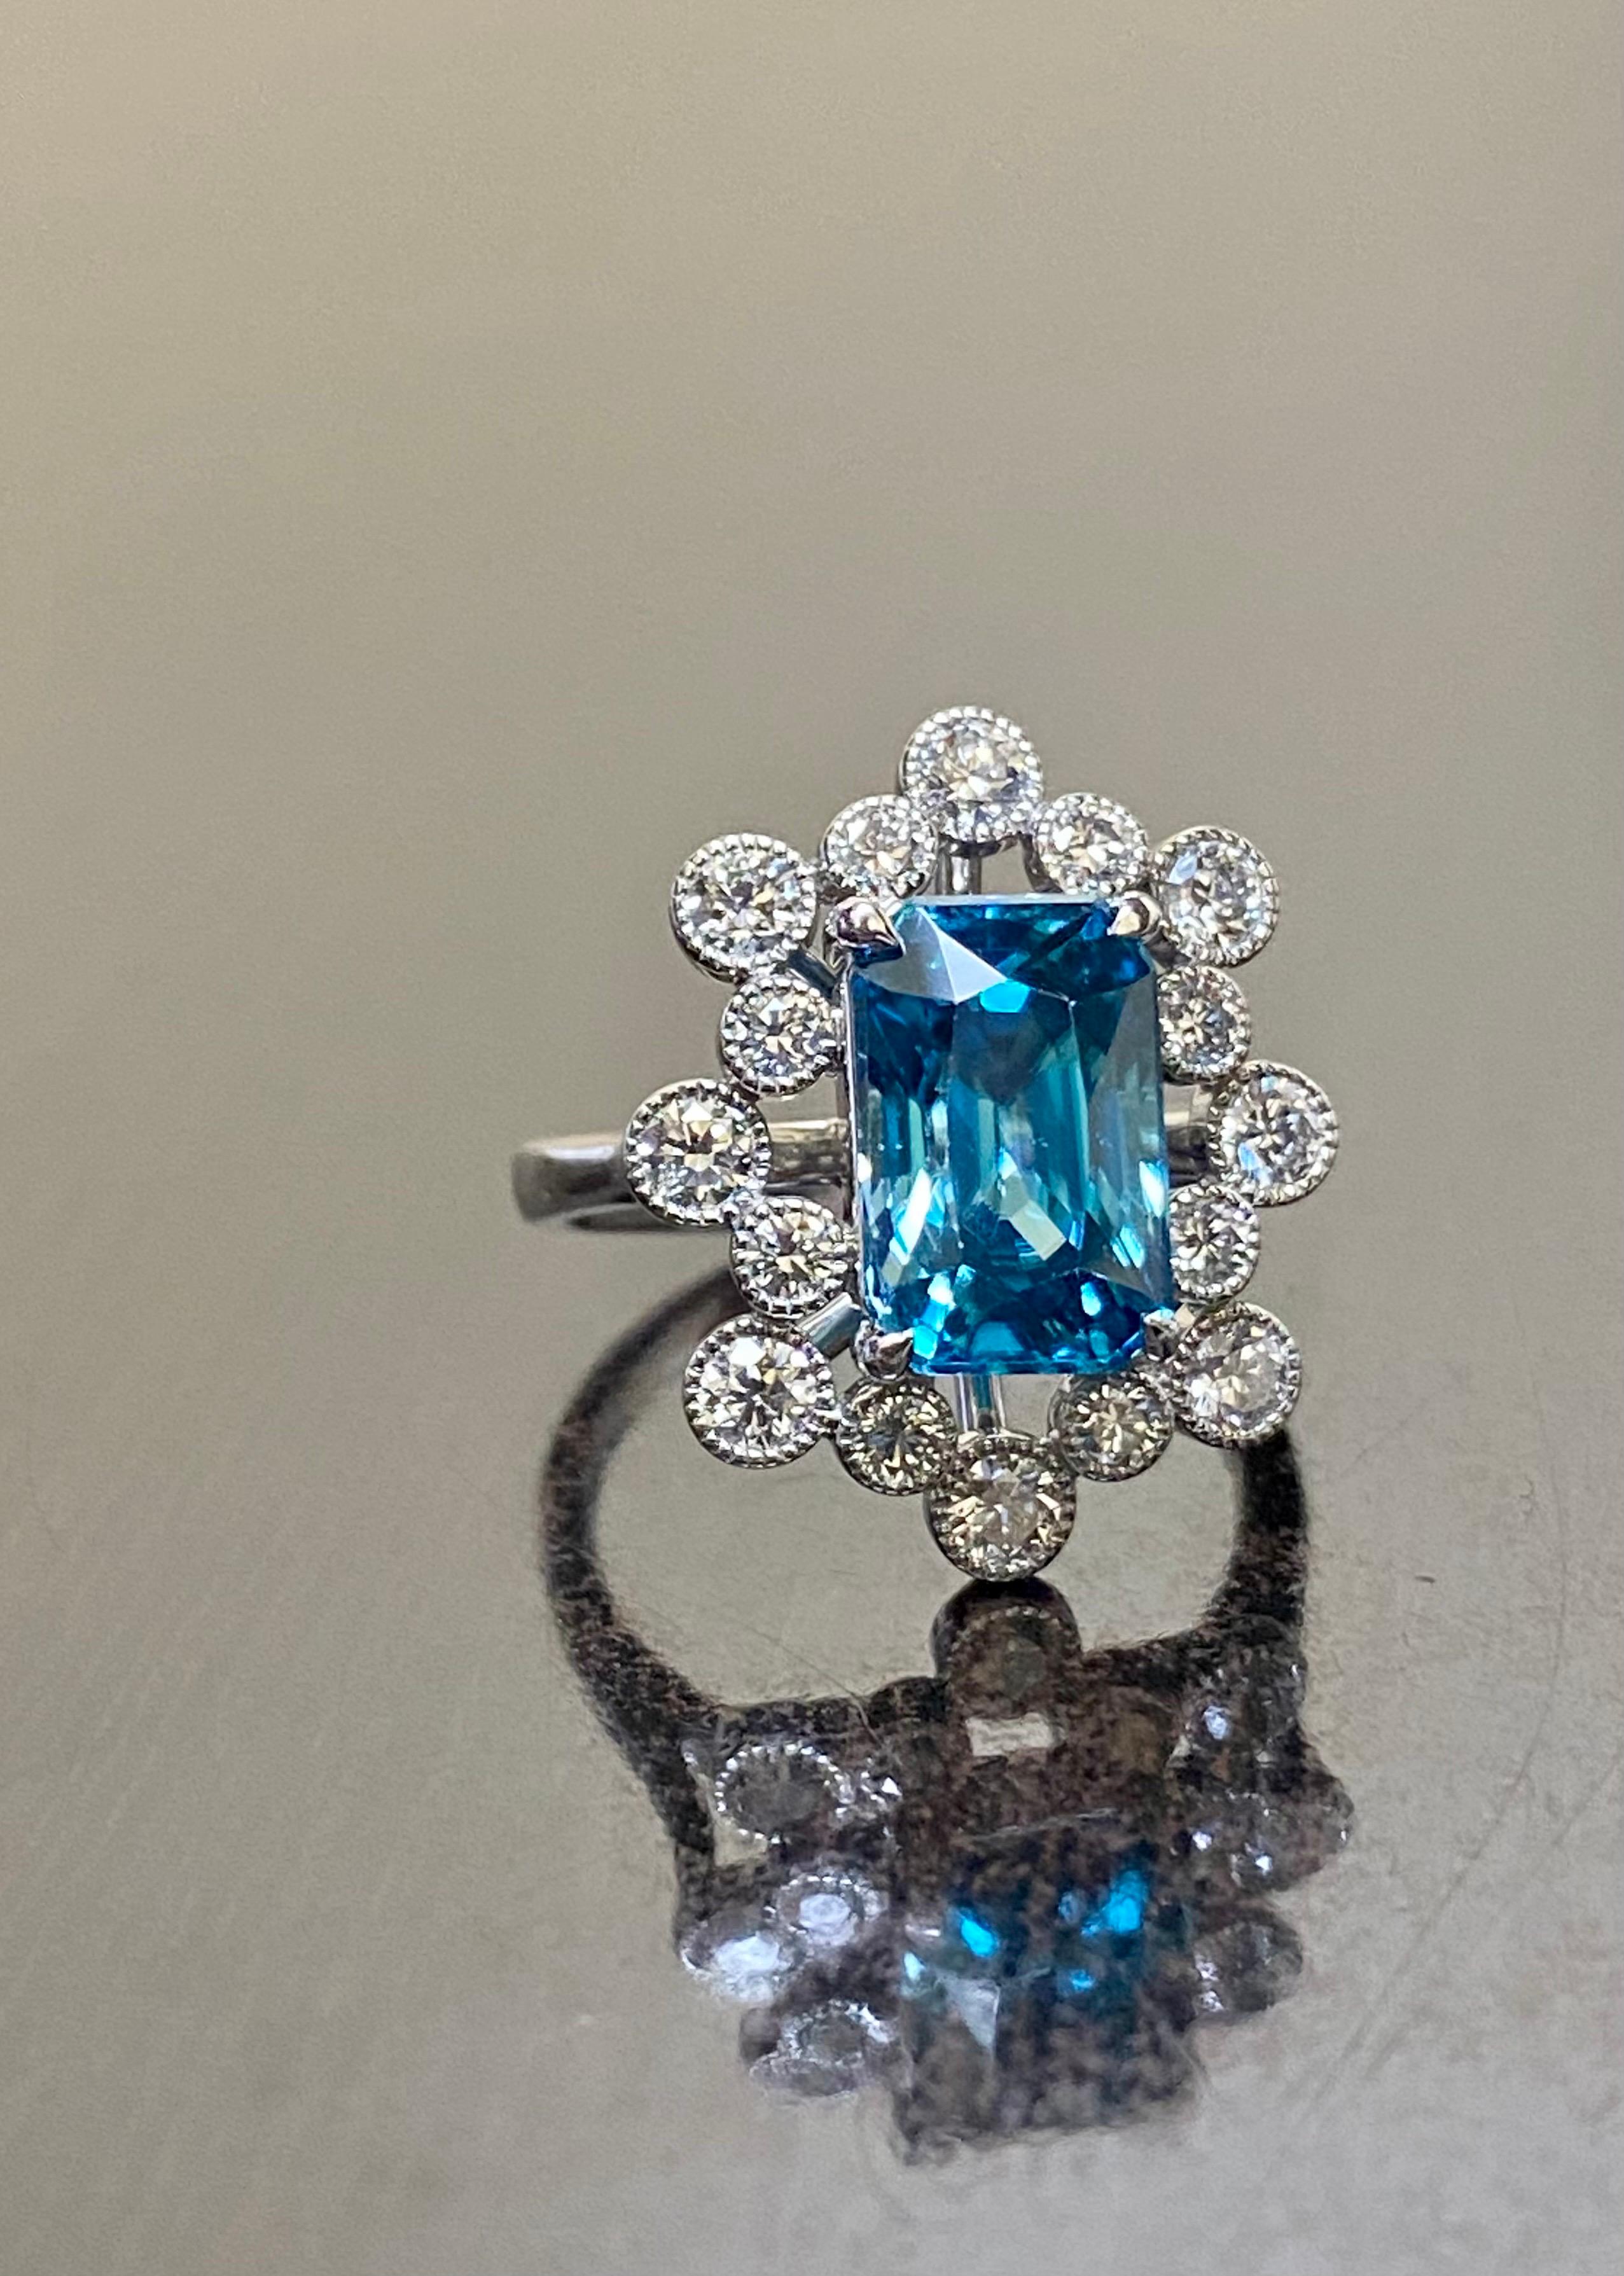 DeKara Designs Collection

Art Deco Inspired Extremely Elegant Entirely Handmade in Platinum Diamond Blue Zircon Engagement Ring.

Metal- 90% Platinum, 10% Iridium.

Stones- 1 Rectangular Radiant Cut Blue Zircon 6.53 Carats, 18 Round Diamonds F-G